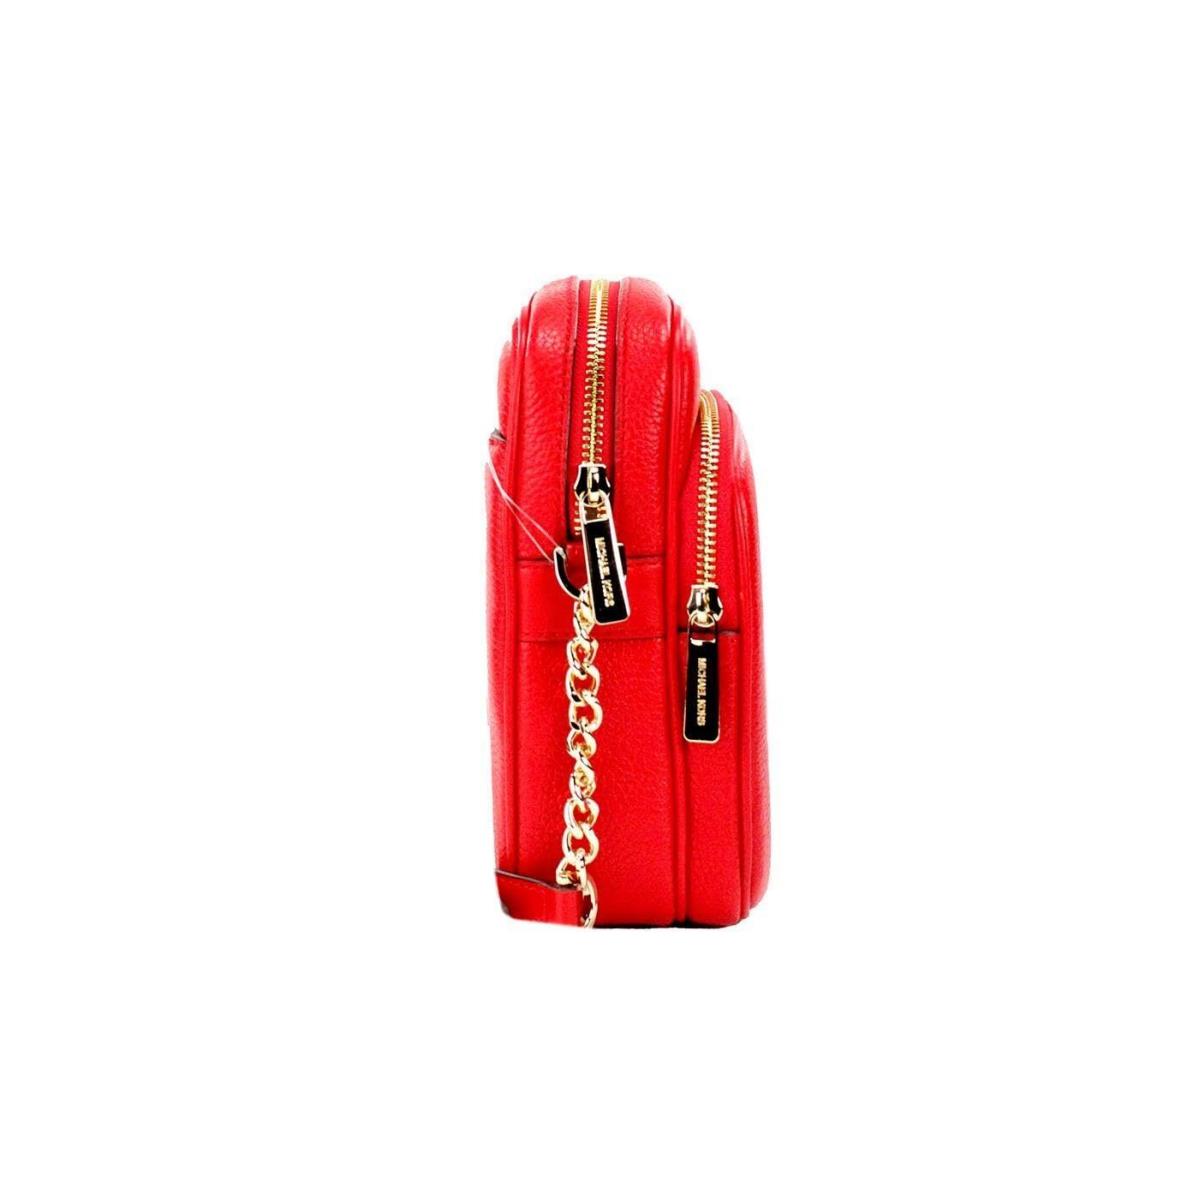 Michael Kors Jet Set Travel Medium Leather Crossbody Bag Bright Red - Exterior: Bright Red